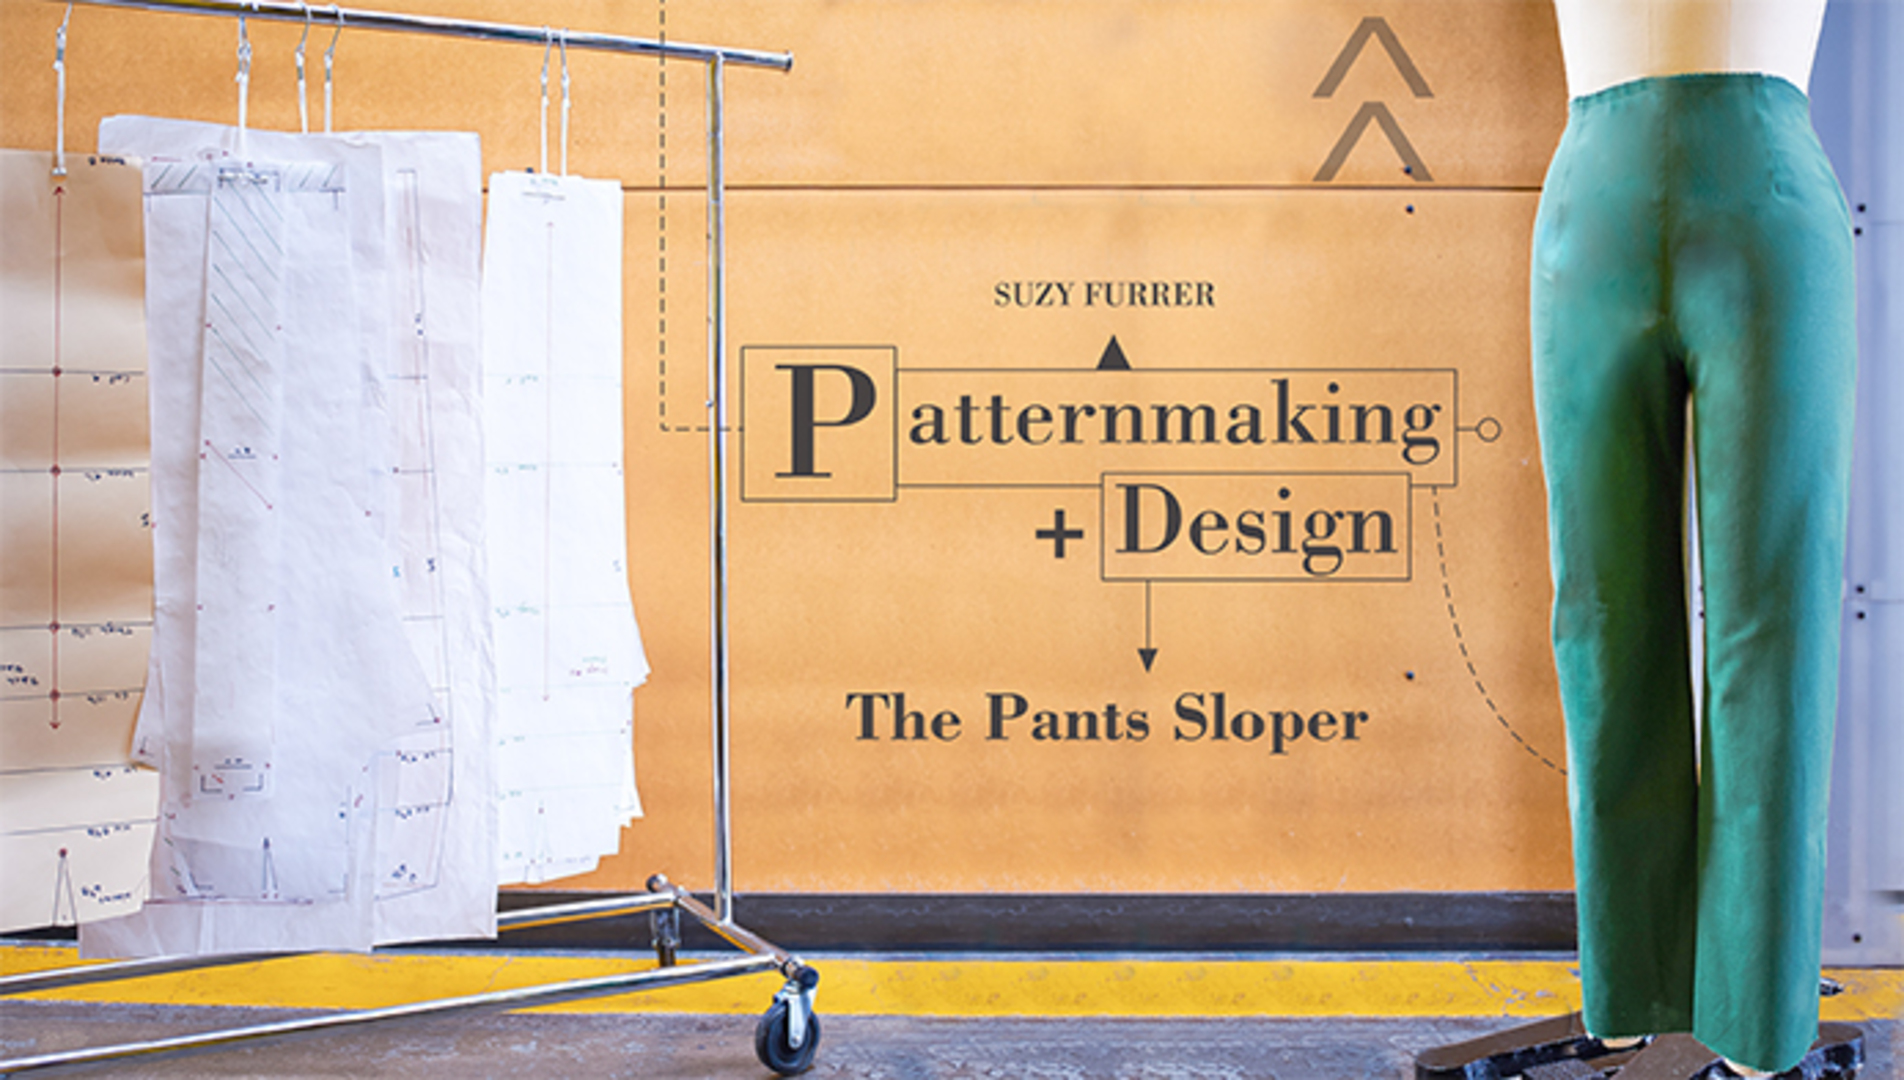 Patternmaking design The Pants Sloper